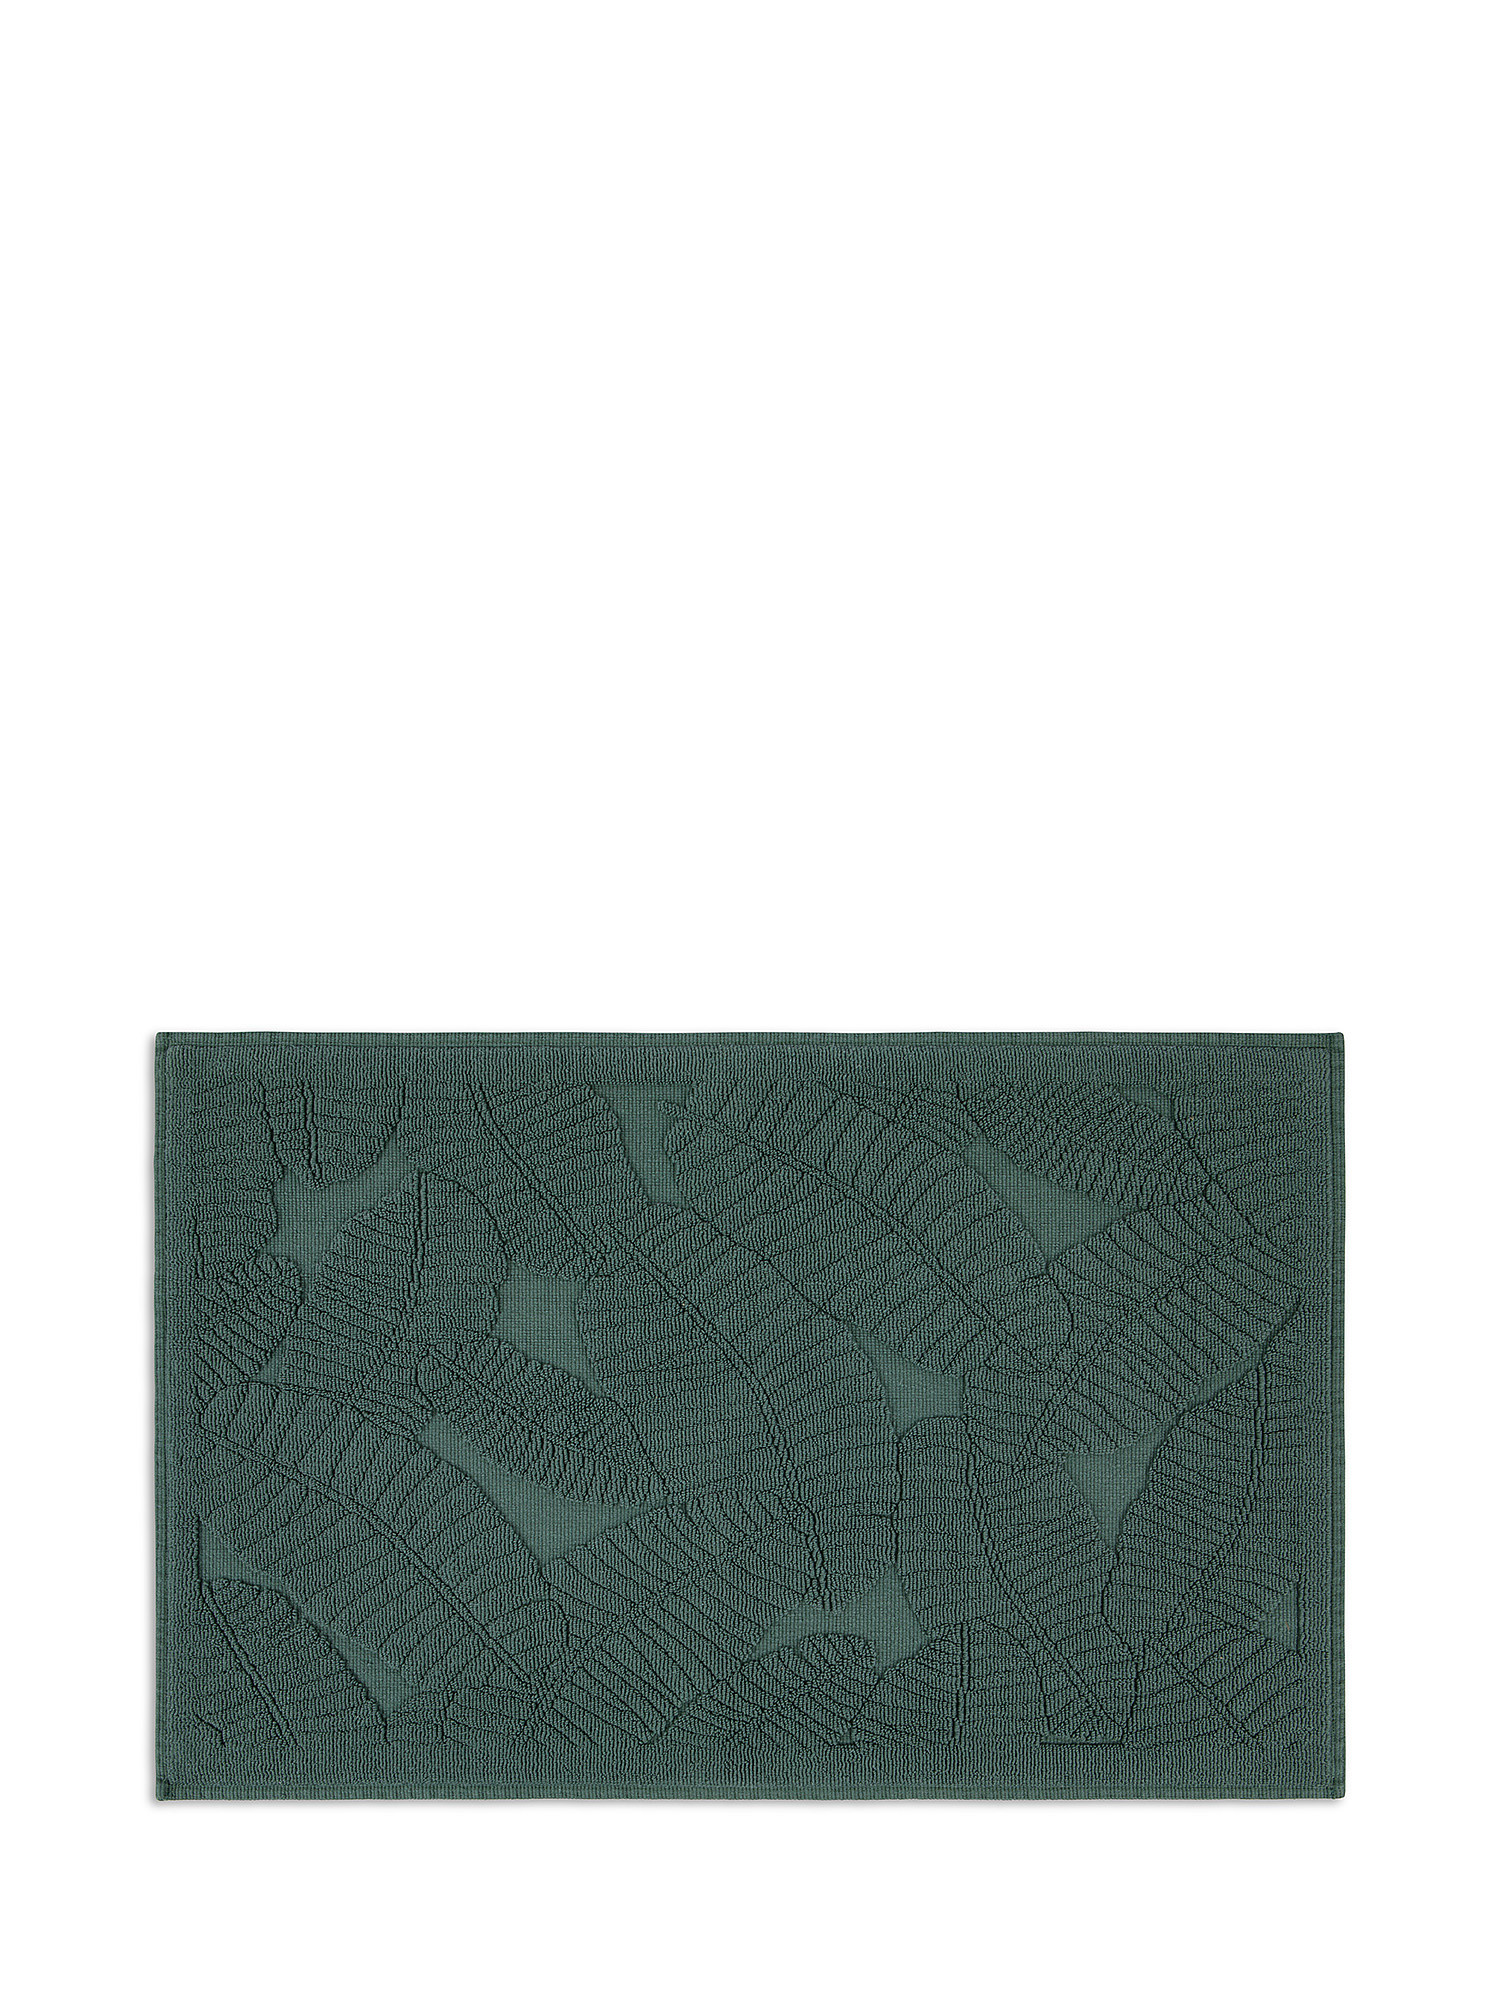 Tappeto doccia cotone tinta unita Zefiro, Verde chiaro, large image number 0